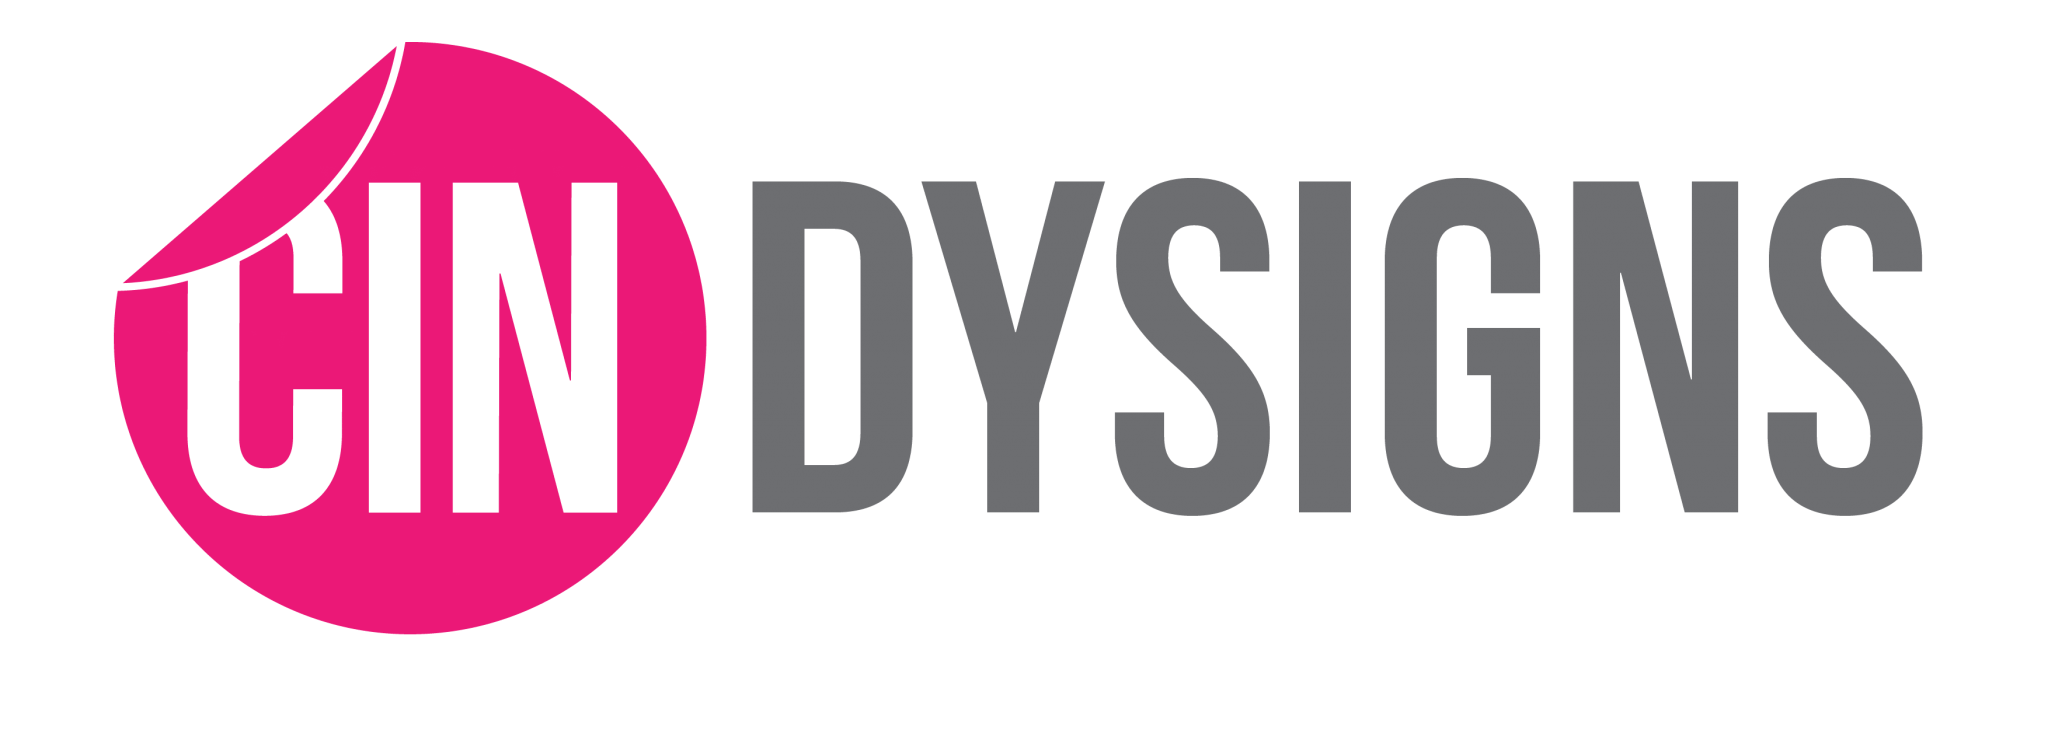 logo cindysigns